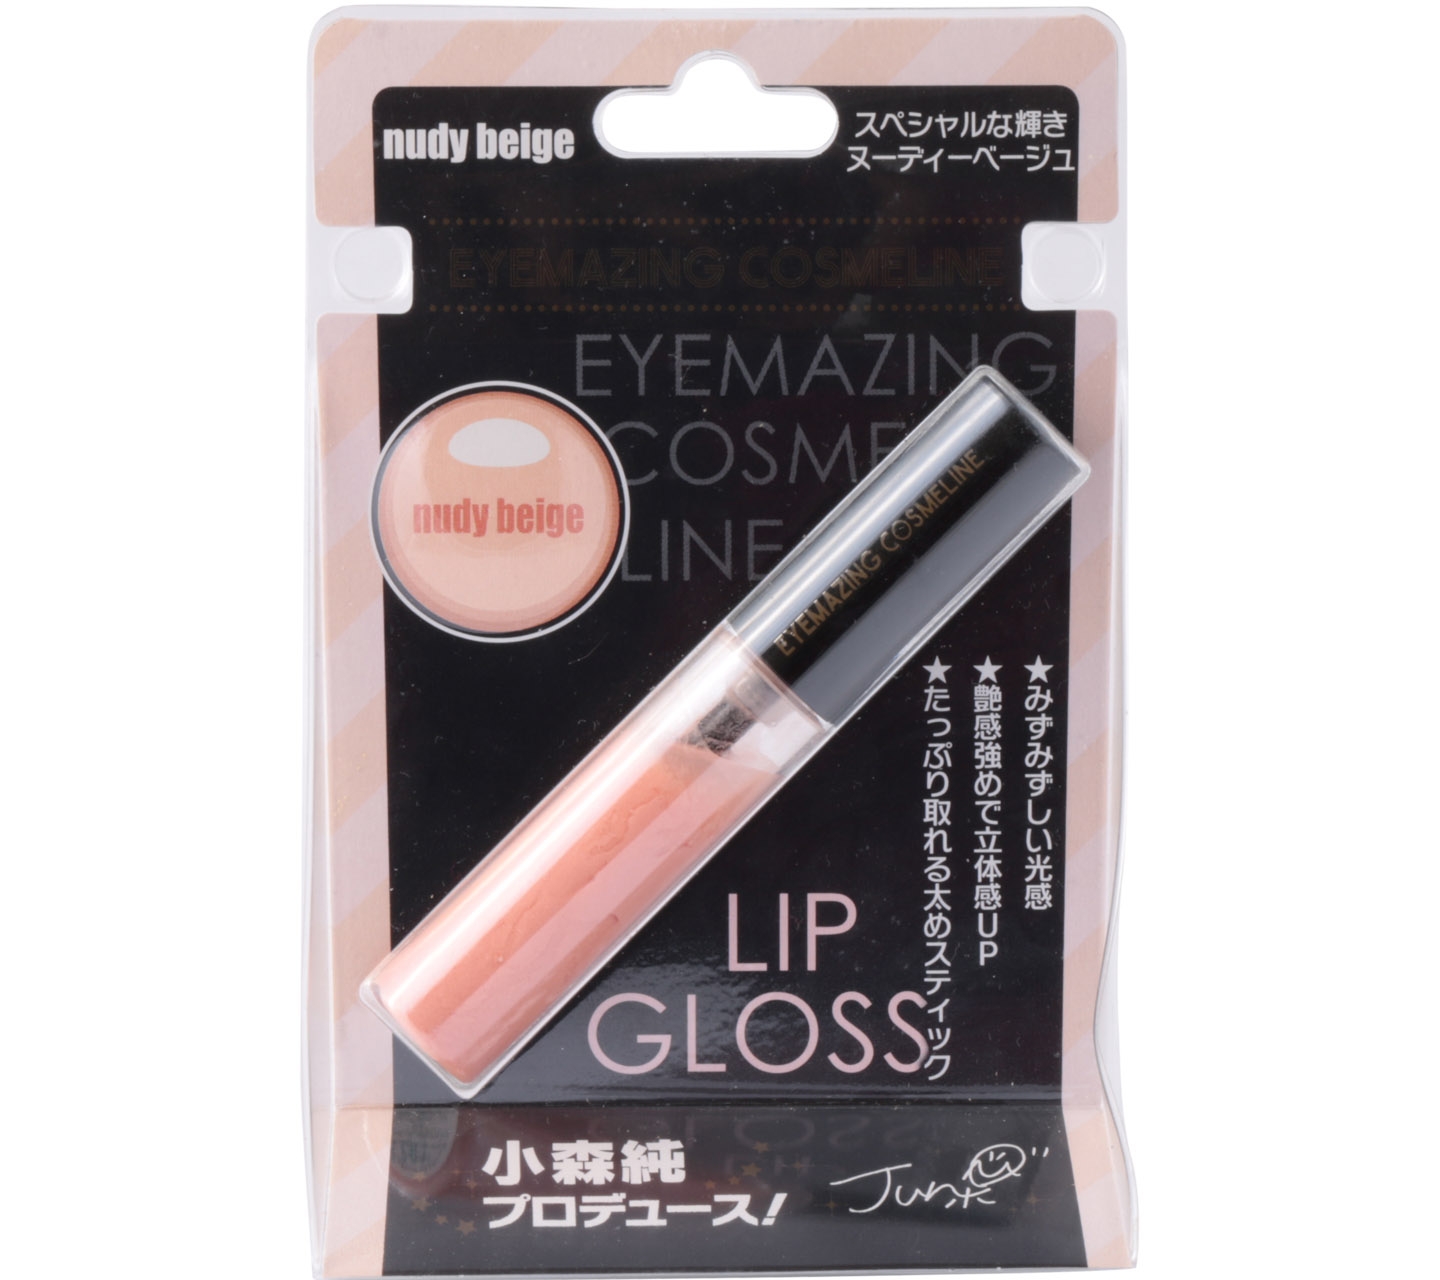 Eyemazing Cosmeline Beige Nudy Gloss Lips